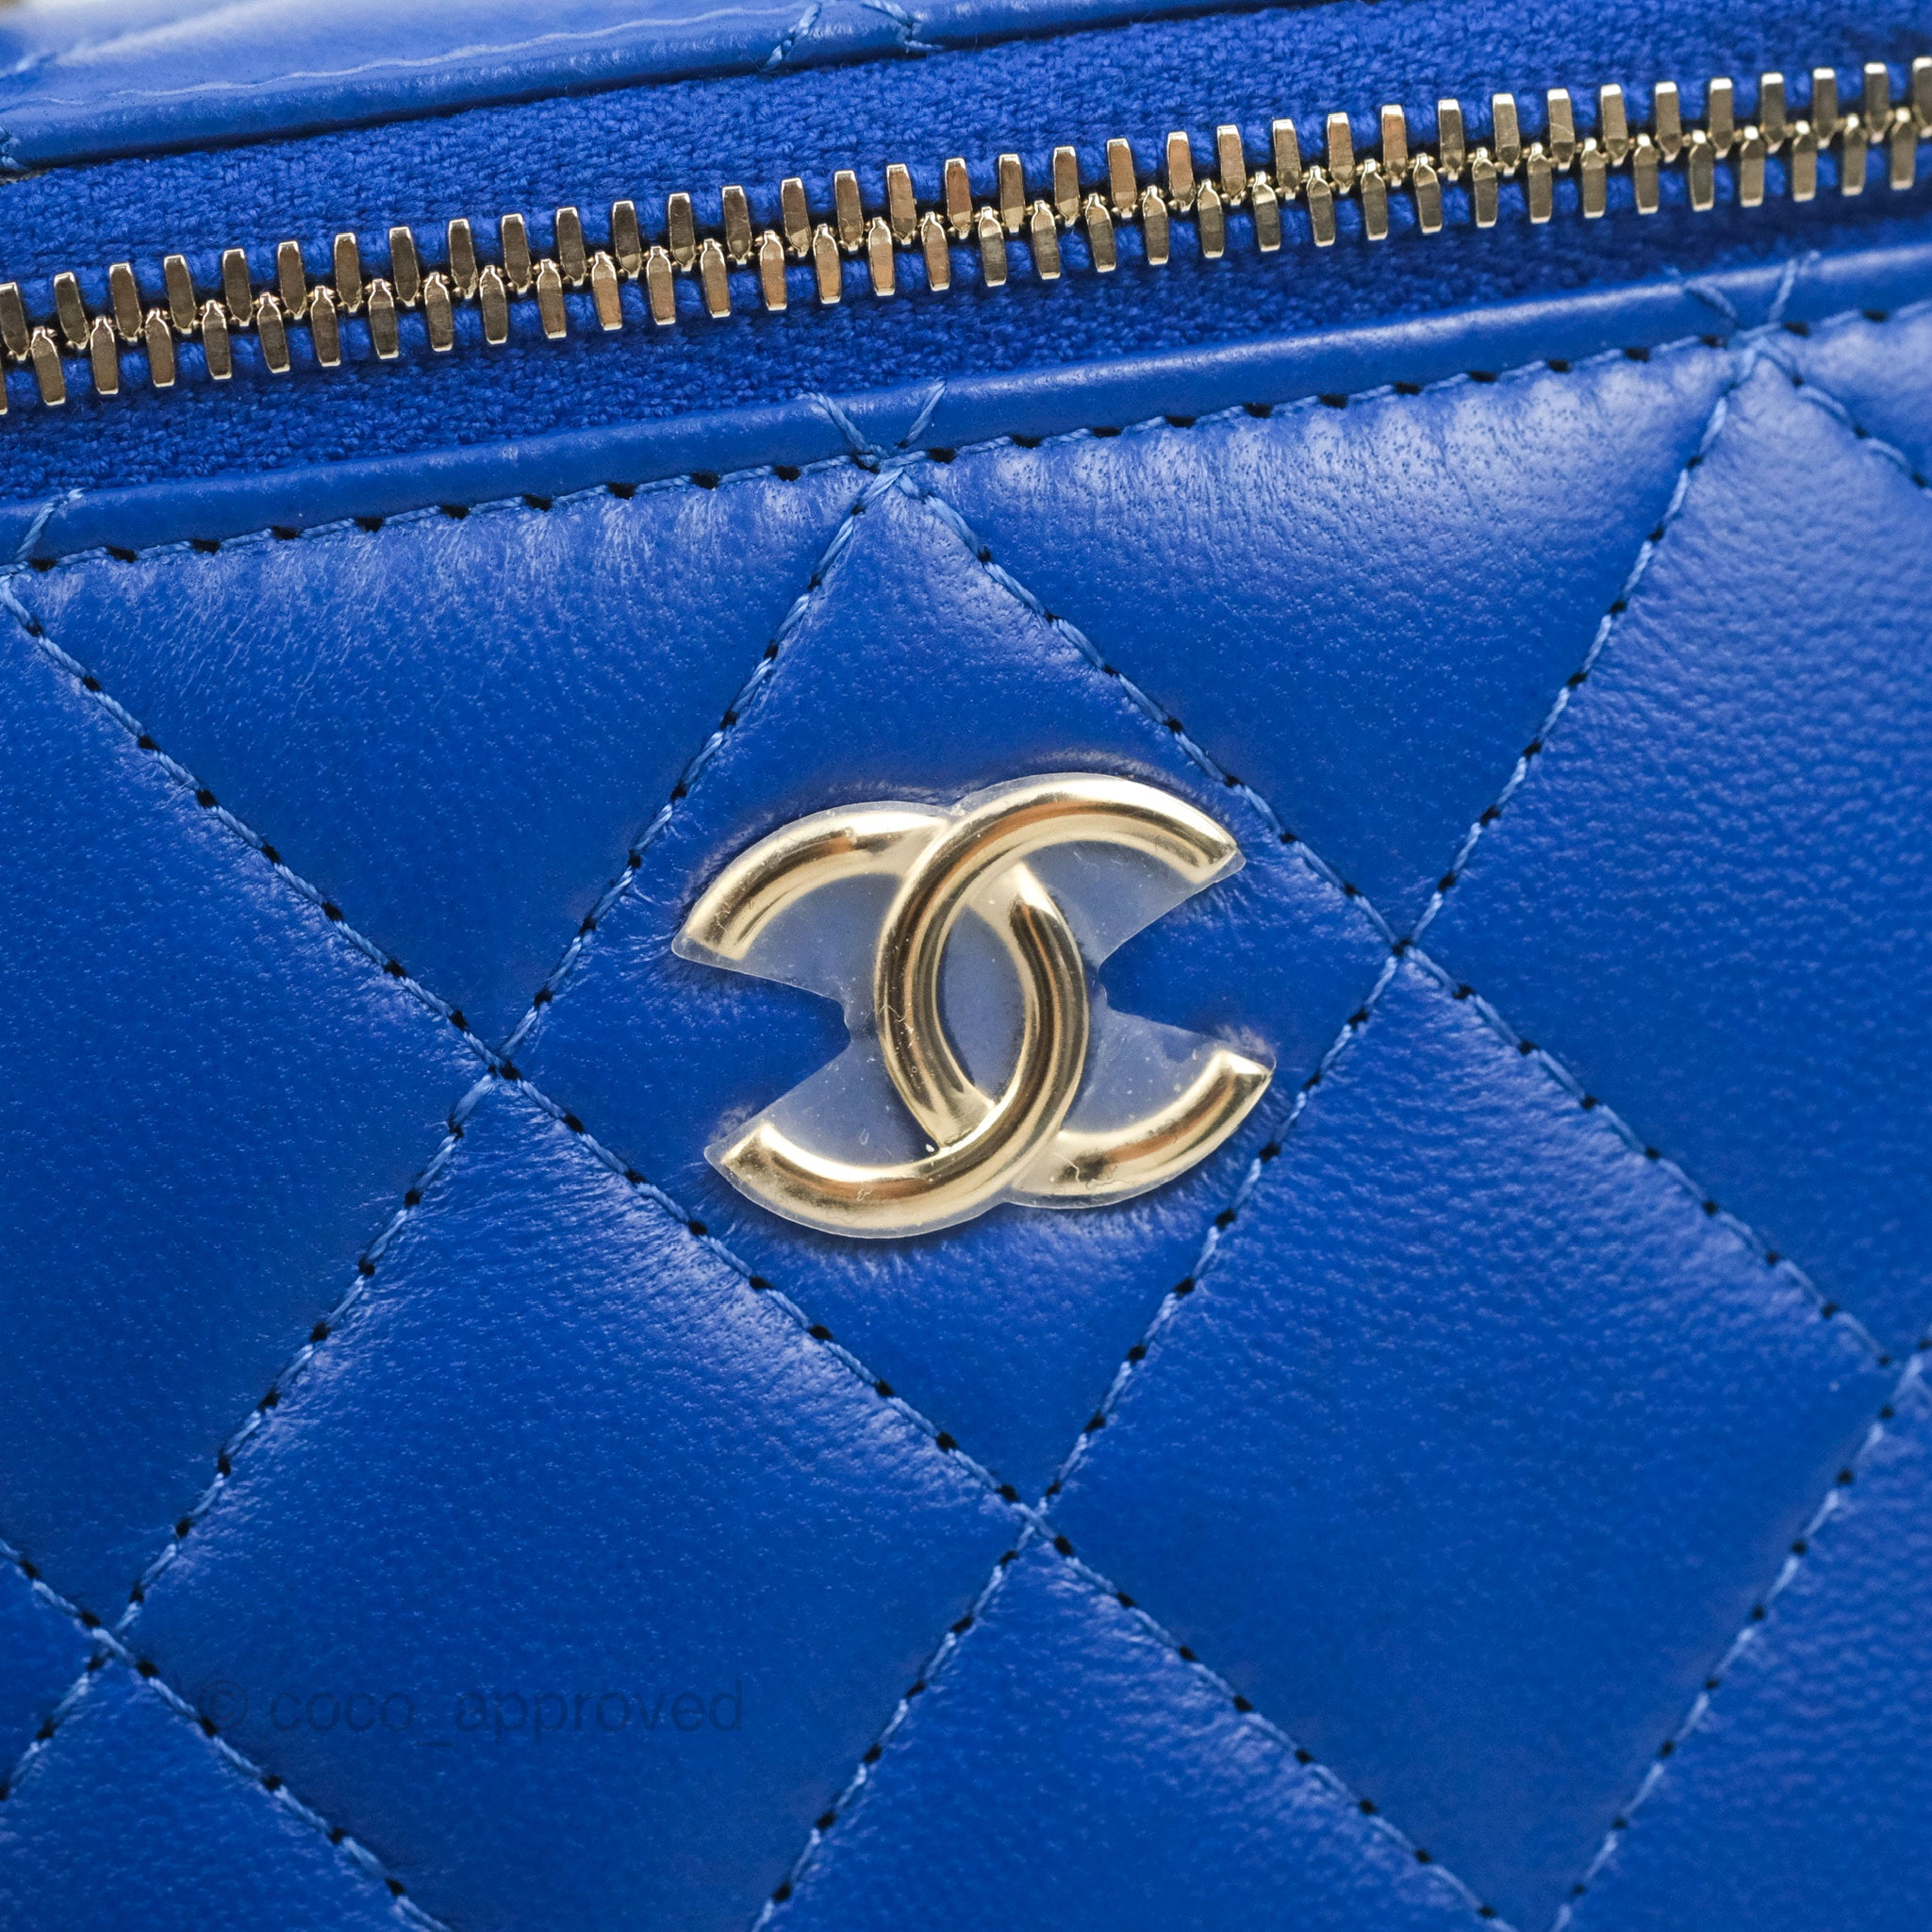 Chanel Metallic Blue Vanity Top Handle Small Bag – The Closet